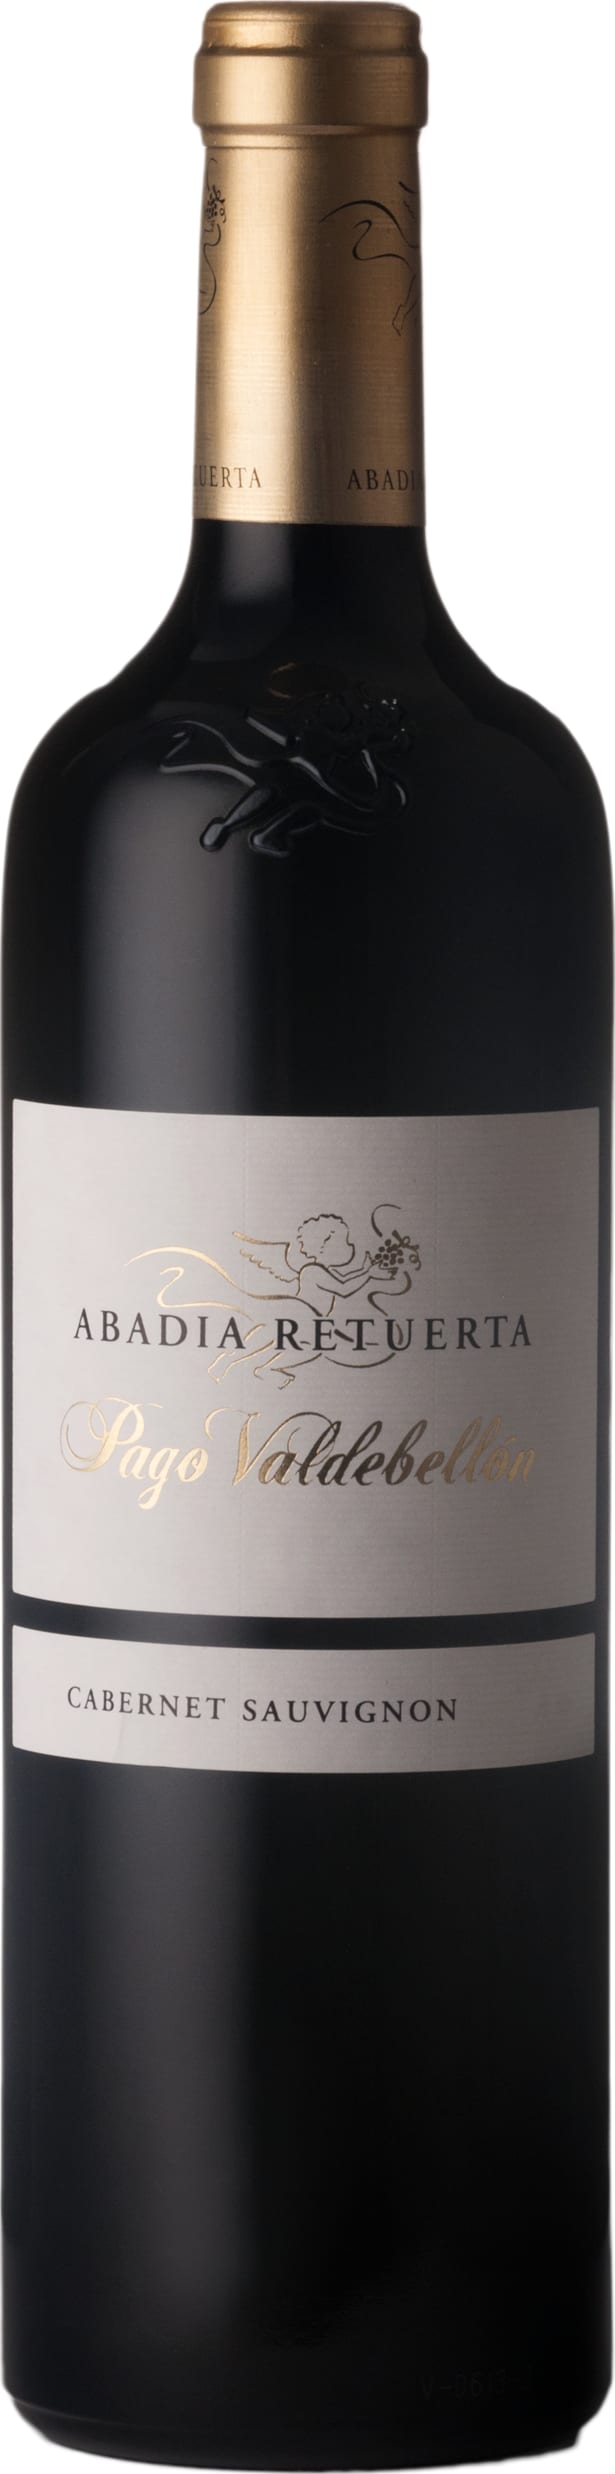 Abadia Retuerta Pago Valdebellon Cabernet Sauvignon 2017 75cl - Buy Abadia Retuerta Wines from GREAT WINES DIRECT wine shop